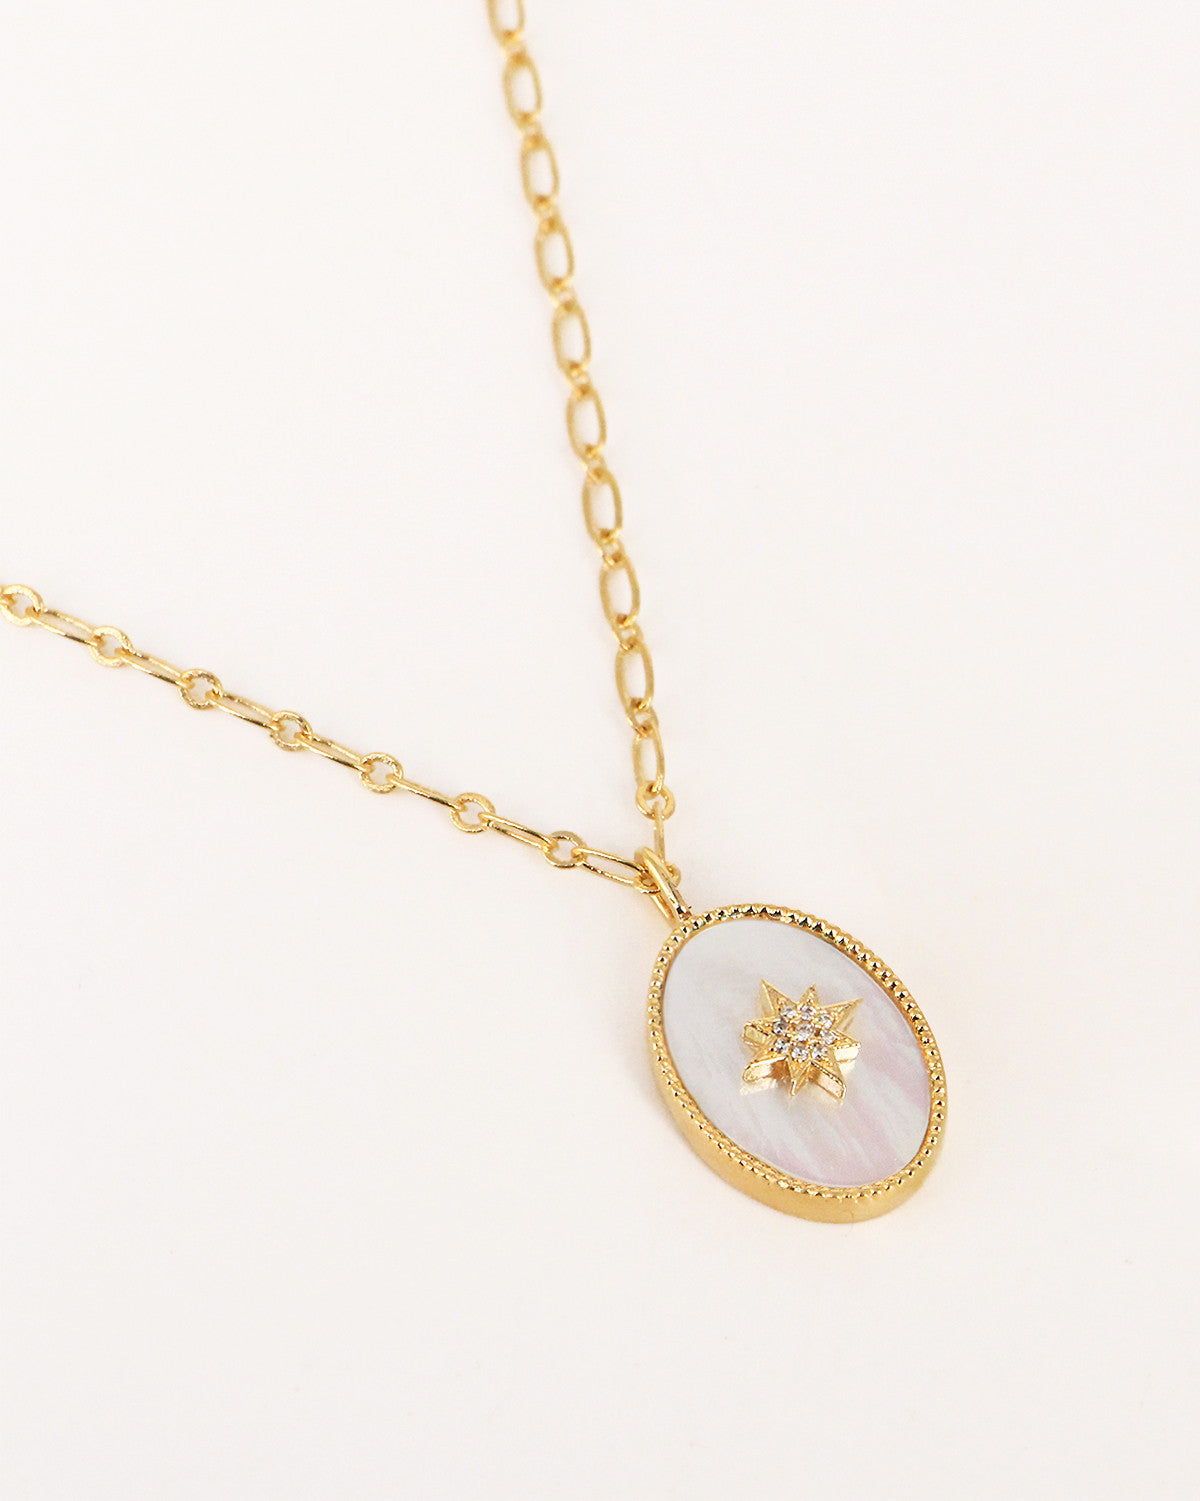 Salome necklace (star) 